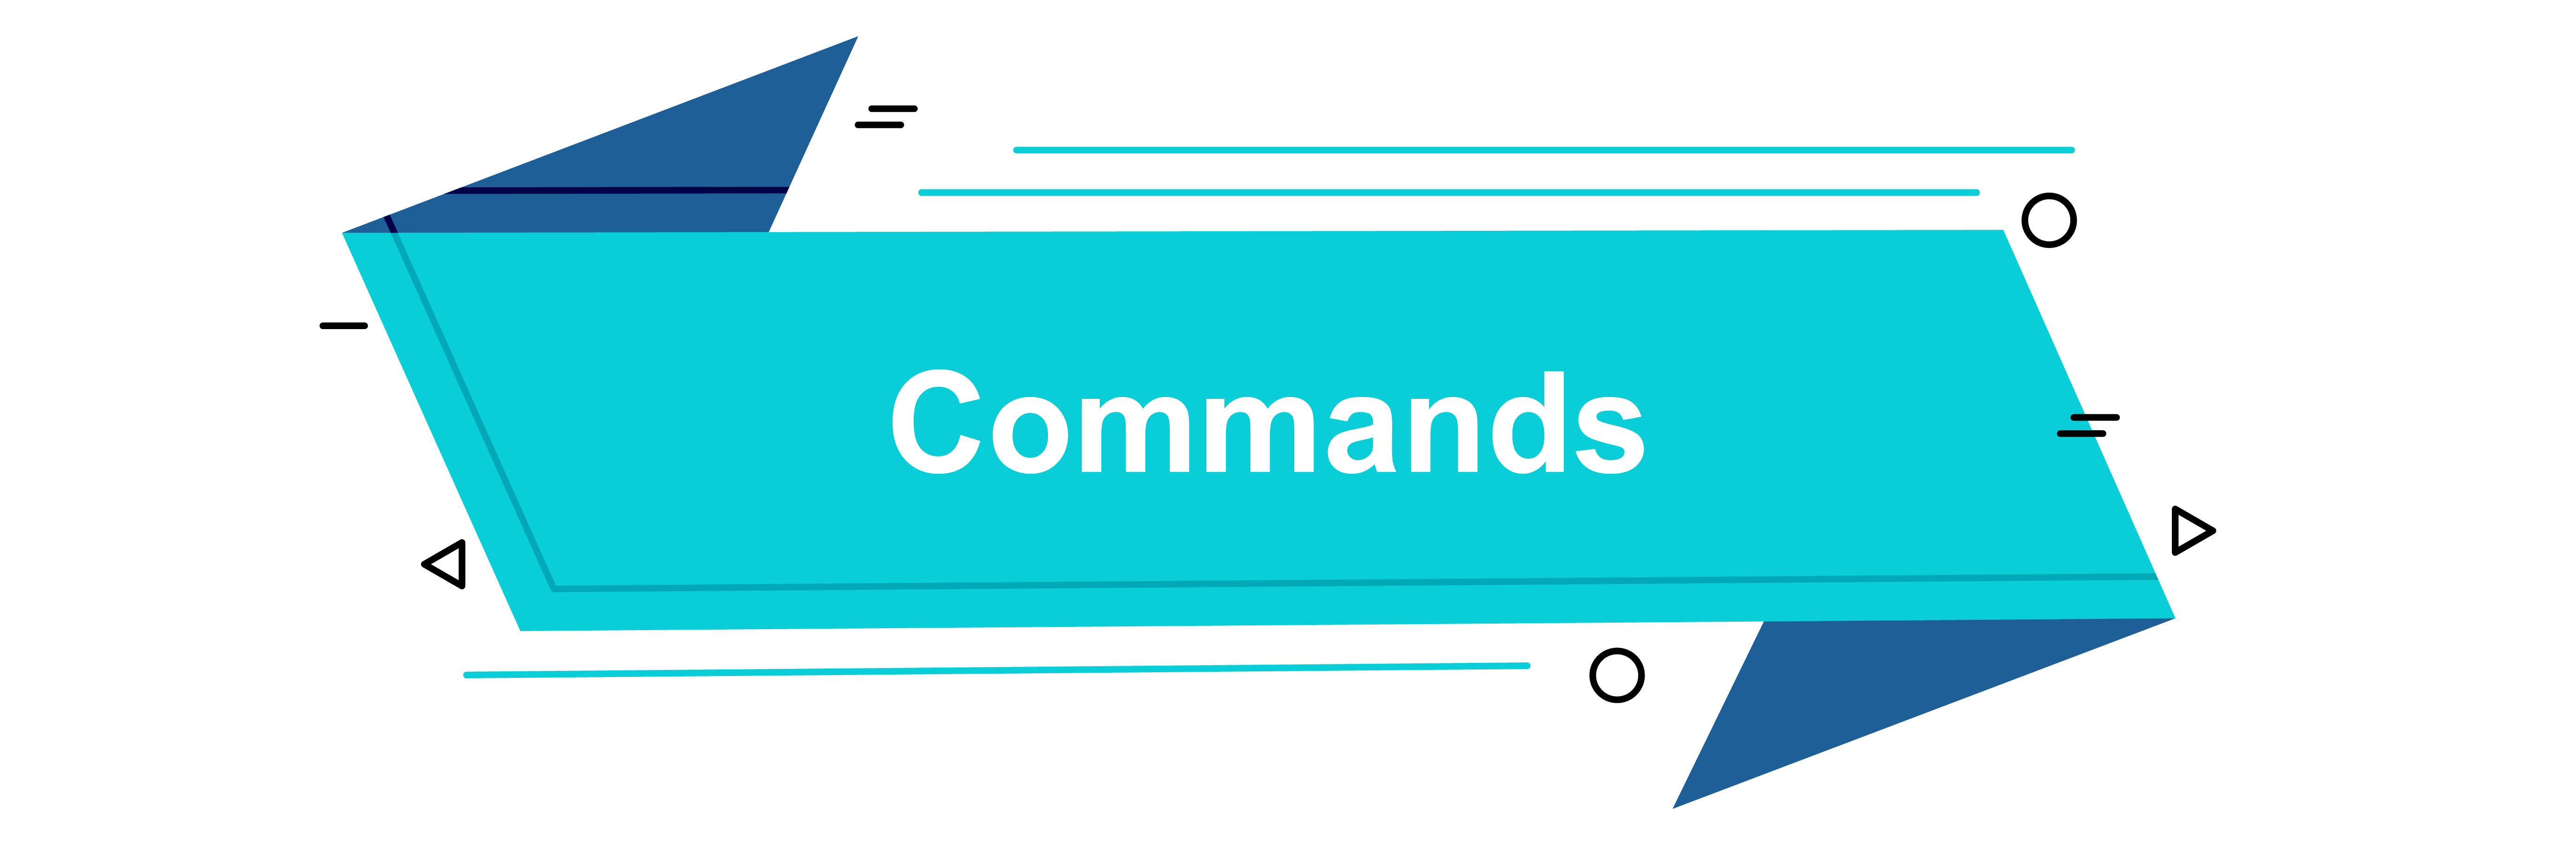 commands.png